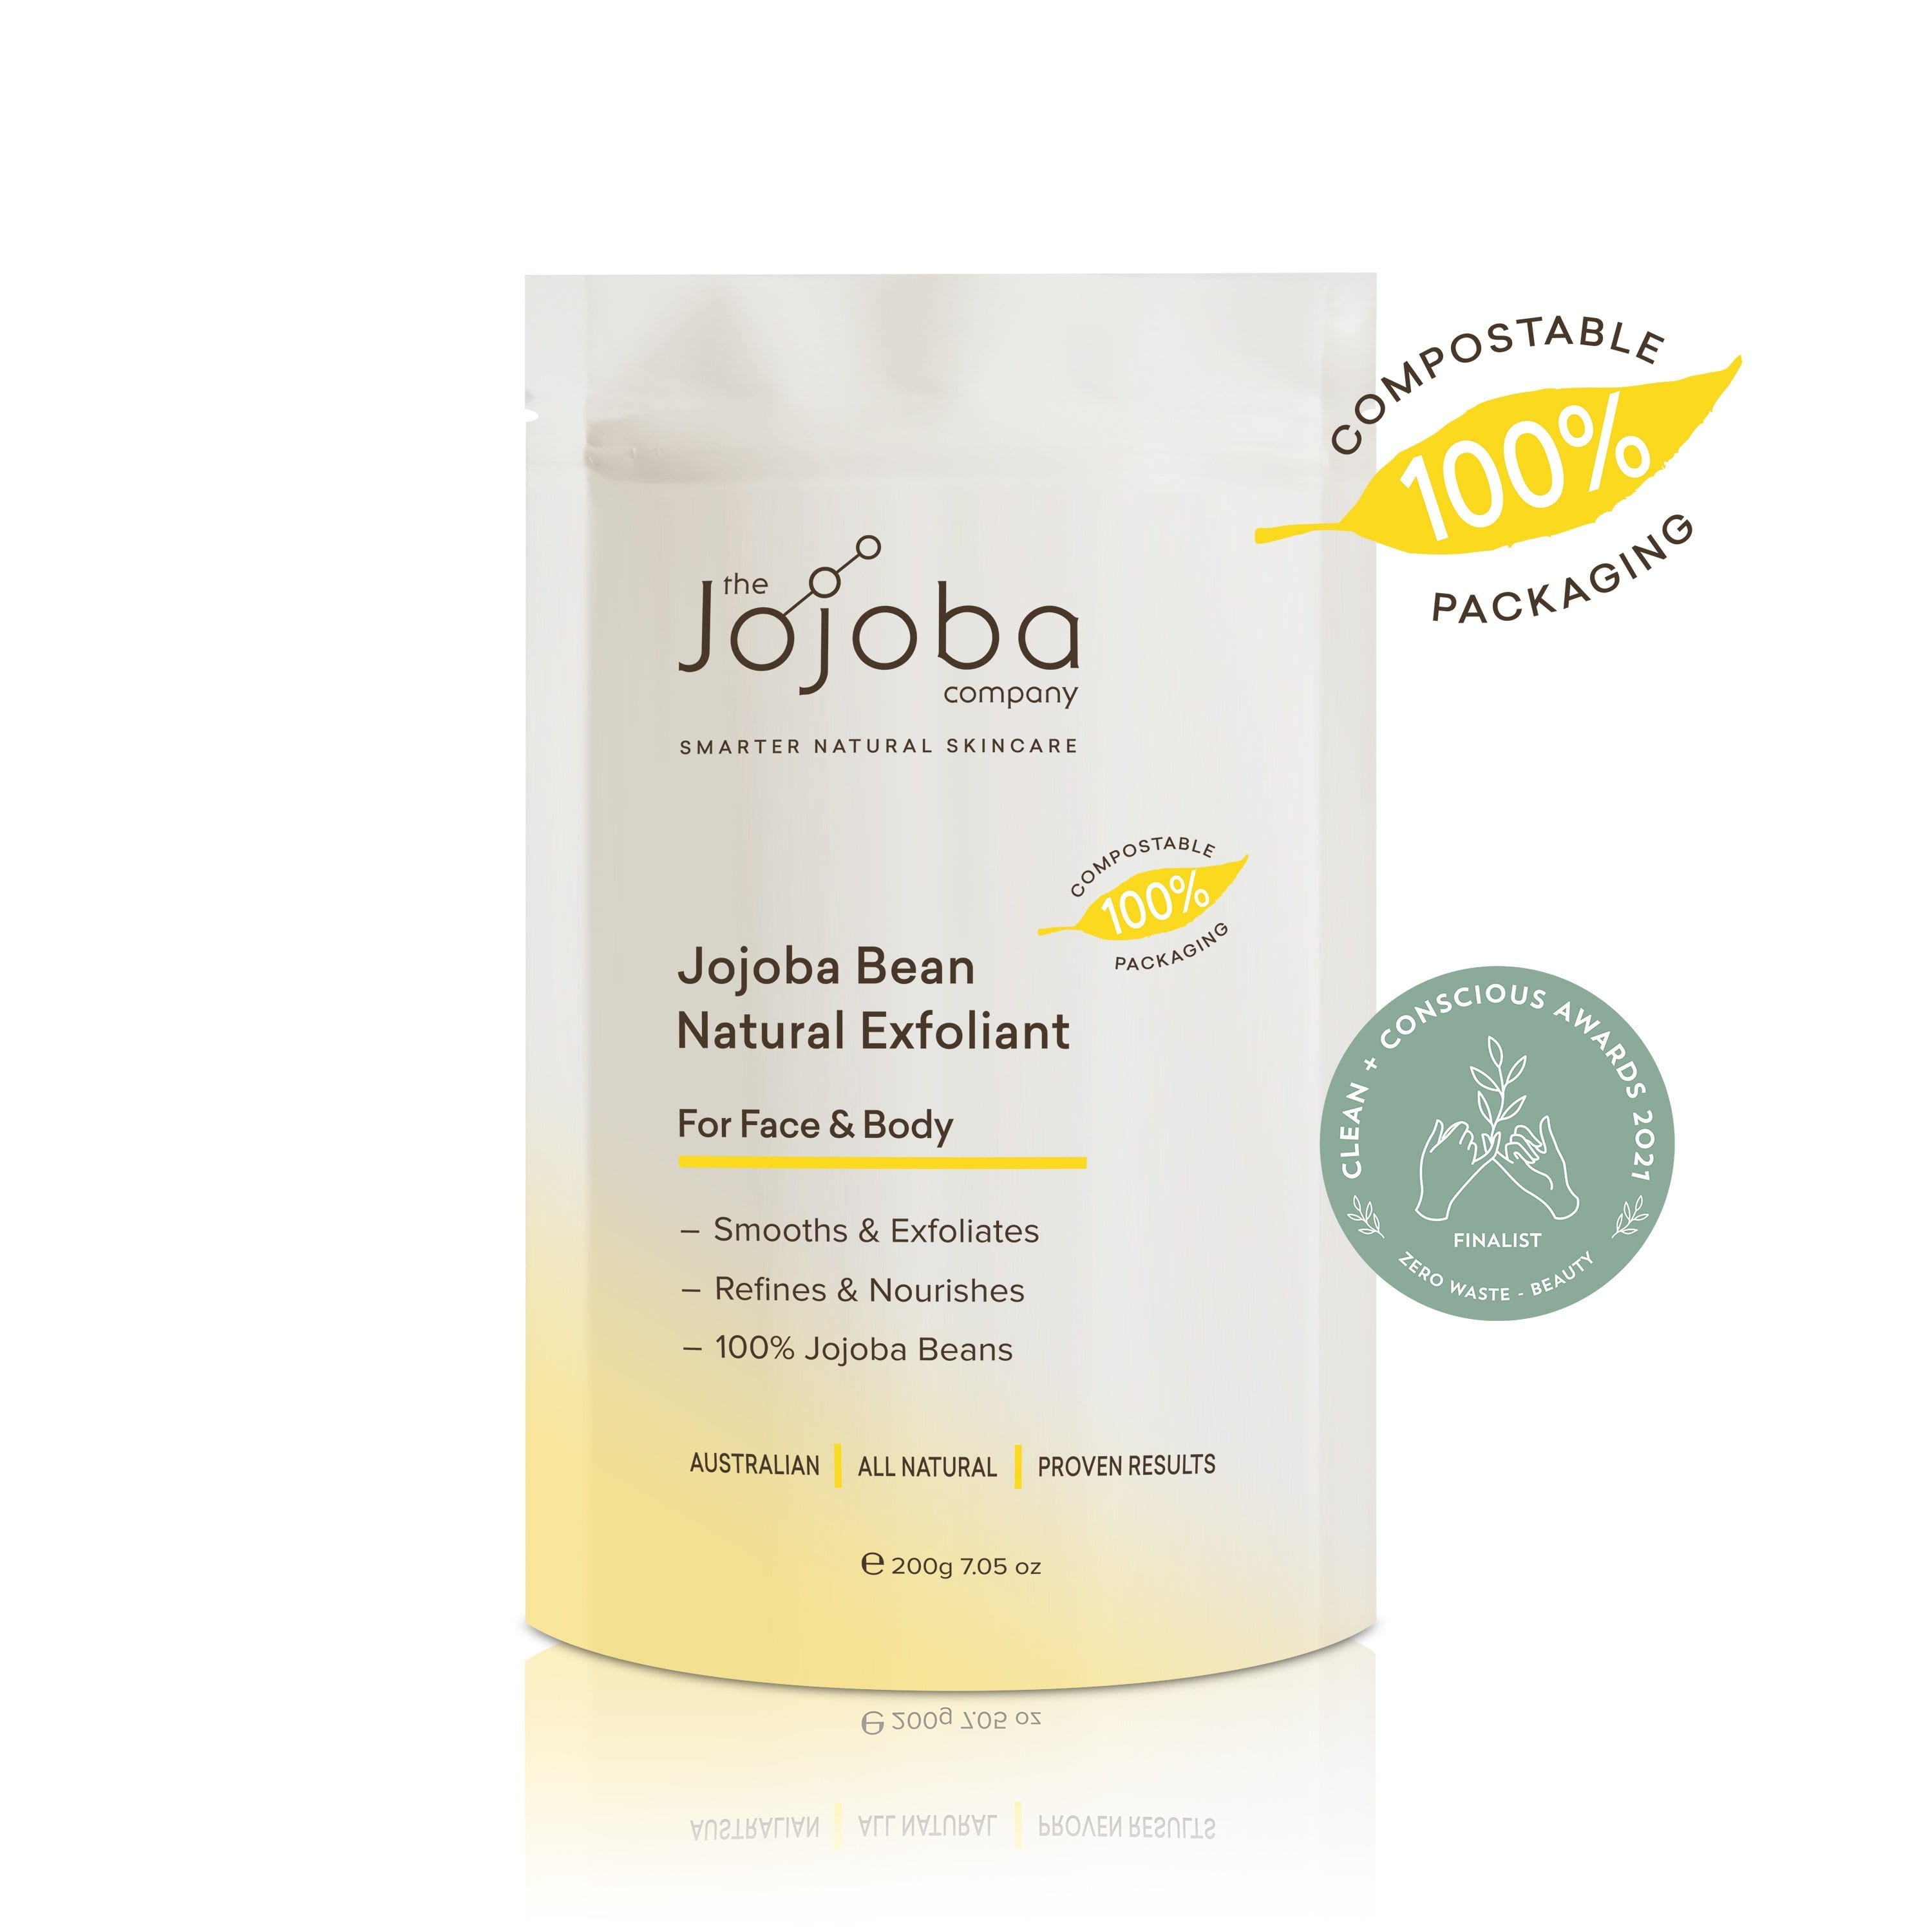 Jojoba Bean Natural Exfoliant Exfoliator The Jojoba Company Australia 